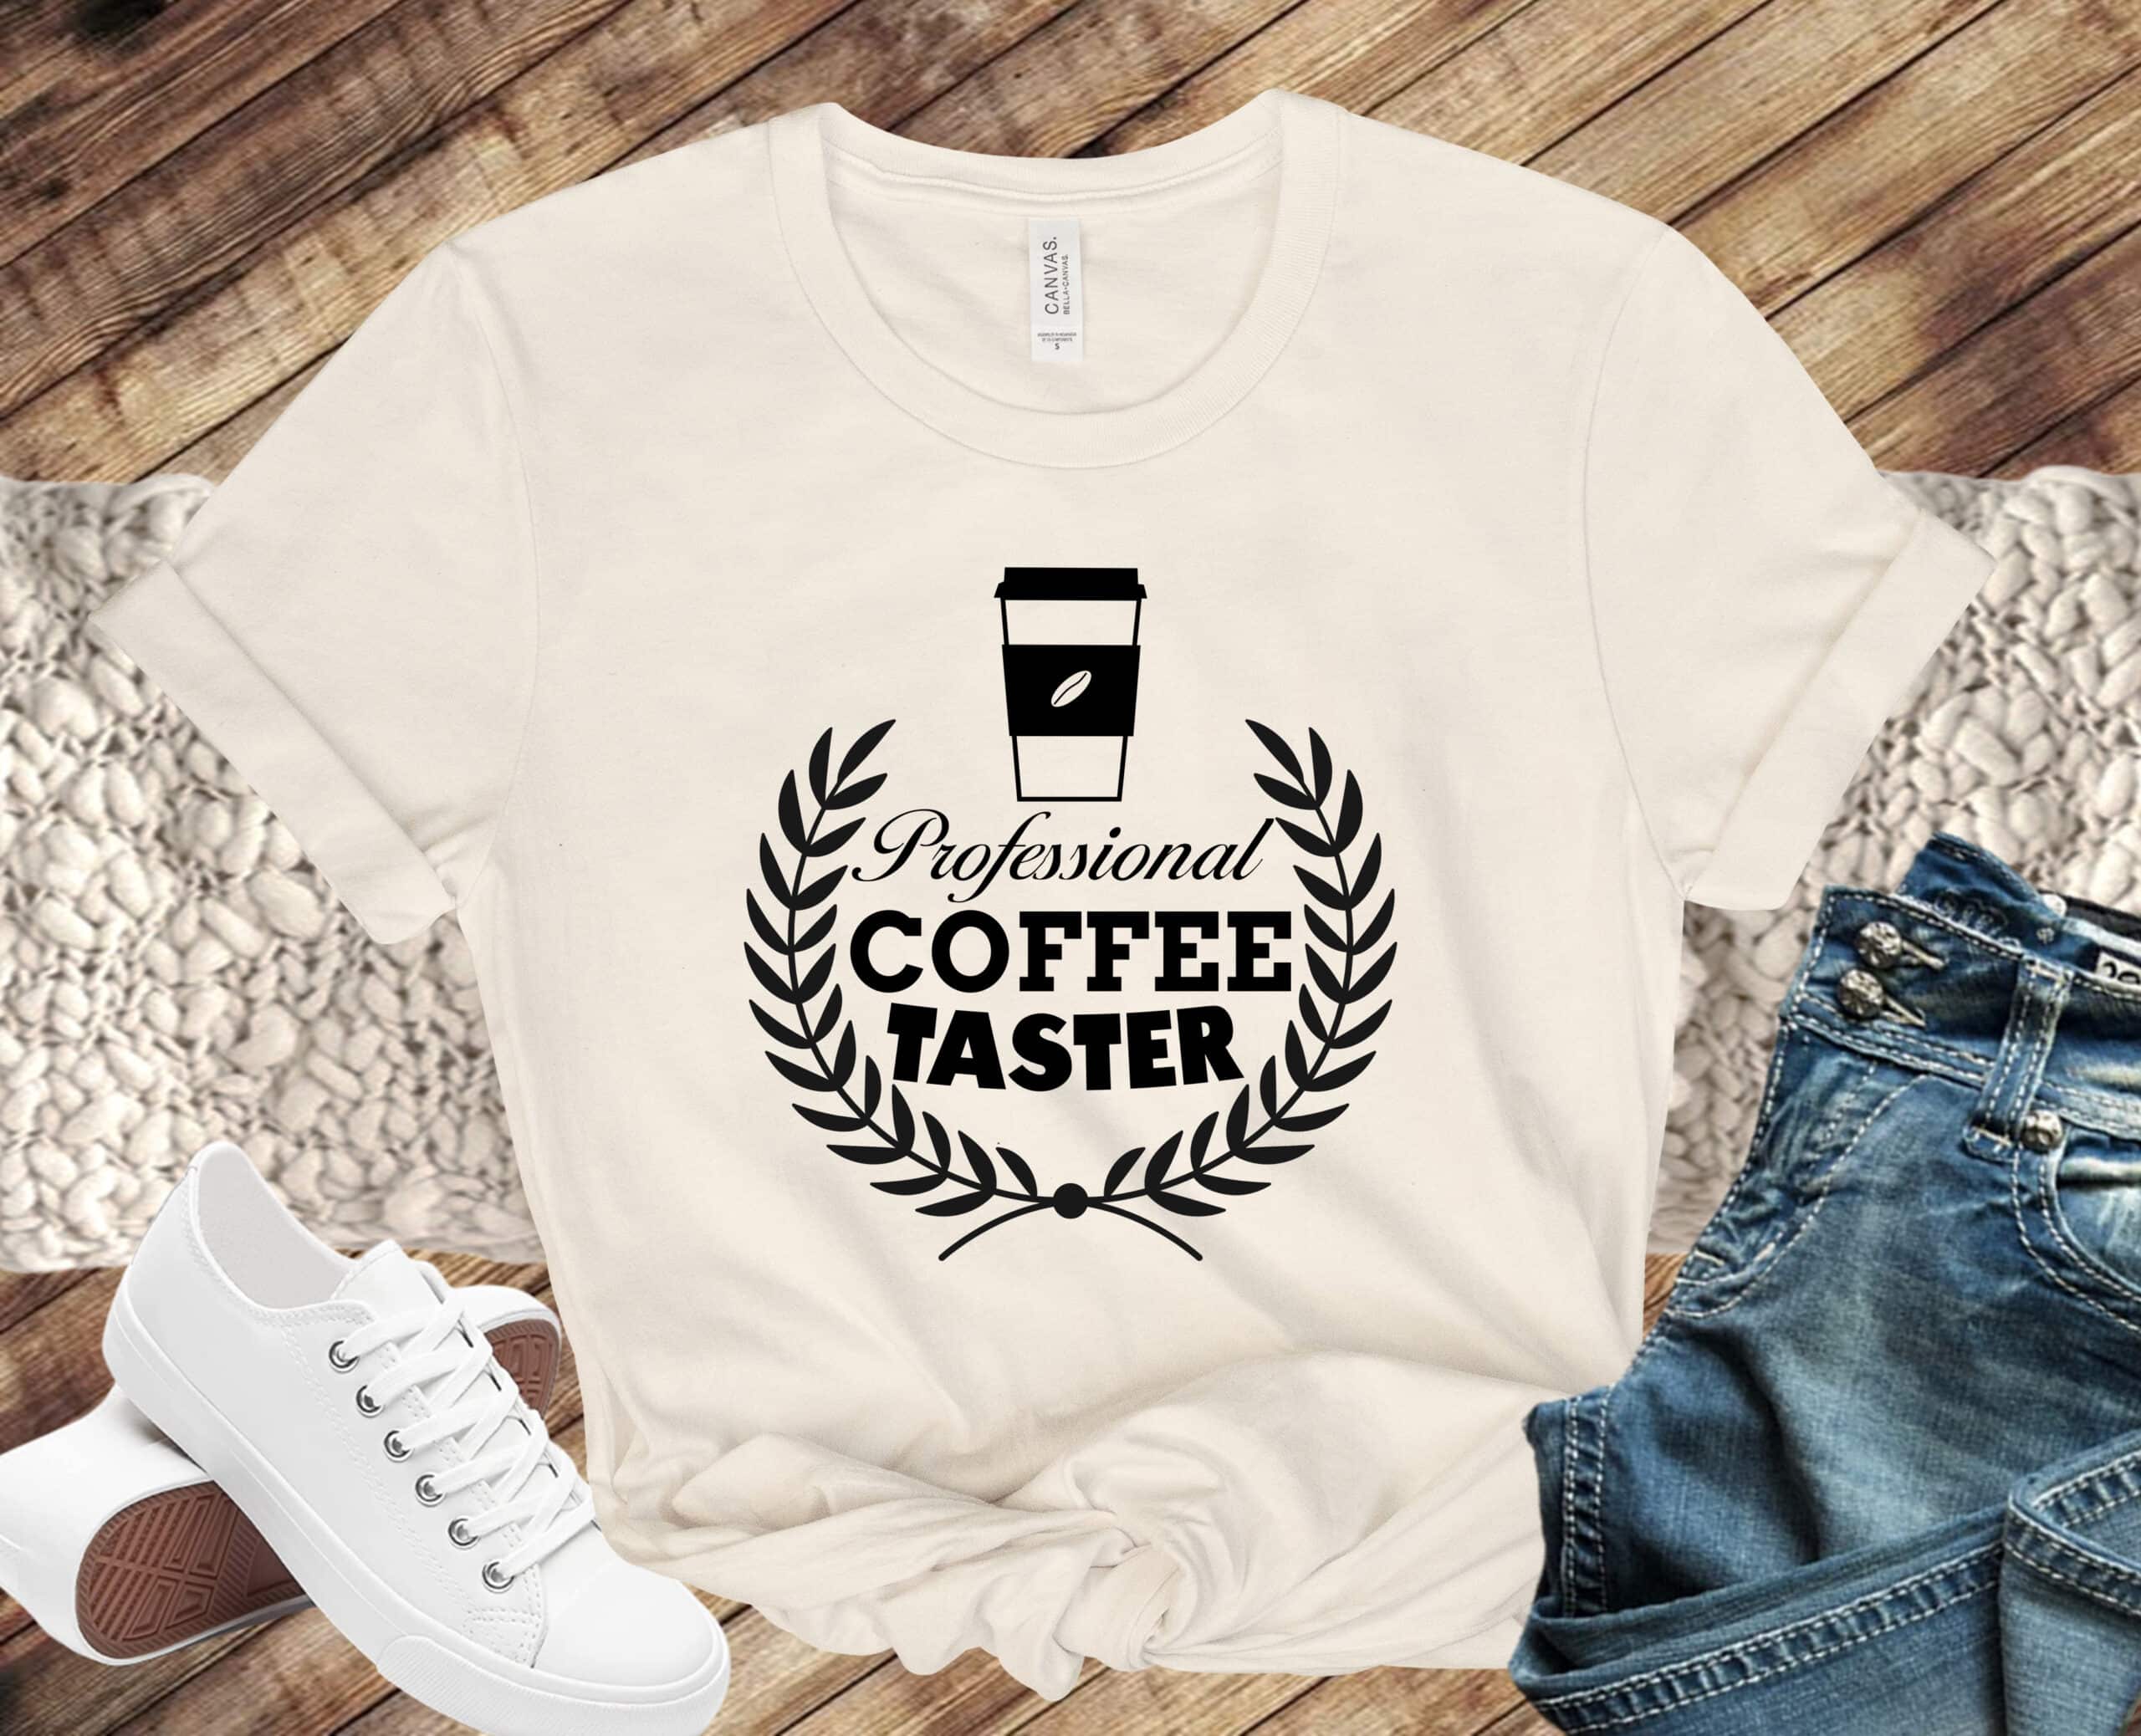 Free Professional Coffee Taster SVG File